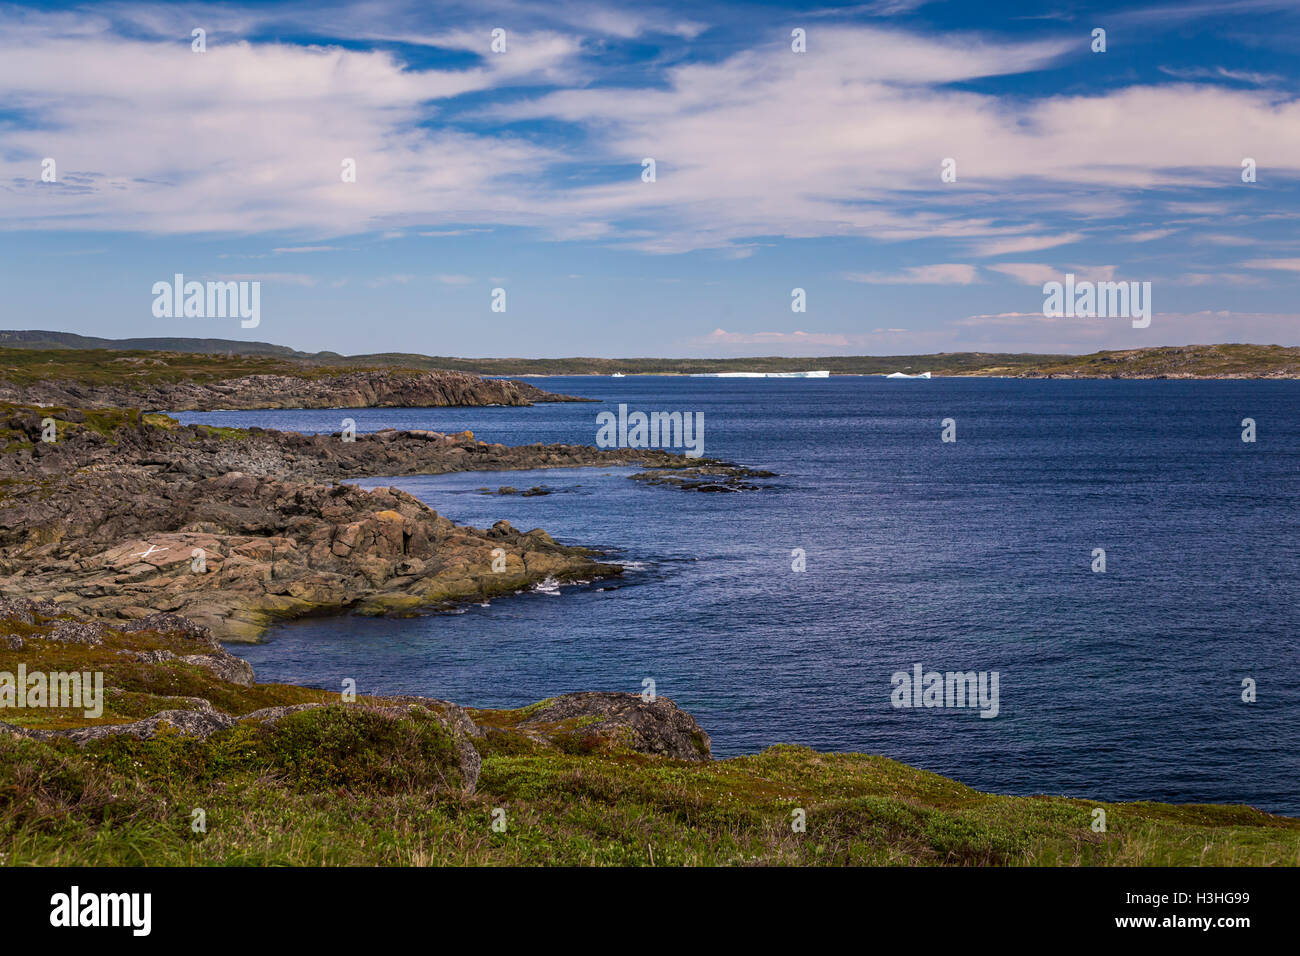 The rocky coastline near St. Anthony, Newfoundland and Labrador, Canada. Stock Photo